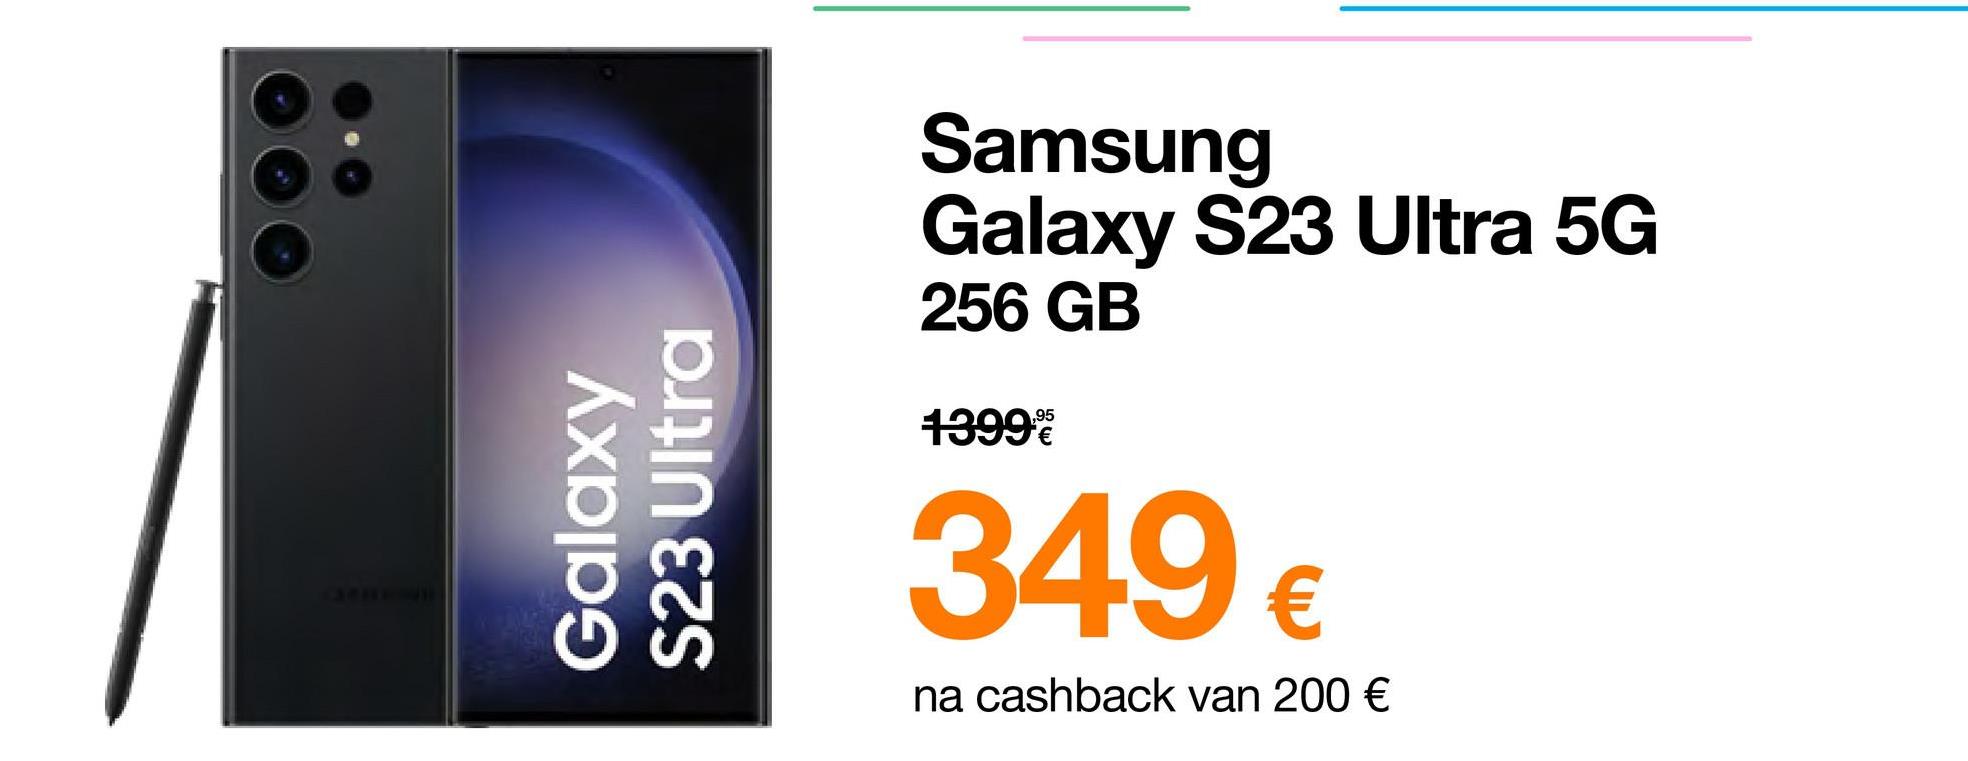 Samsung
Galaxy S23 Ultra 5G
256 GB
1999*%*
8349€
na cashback van 200 €